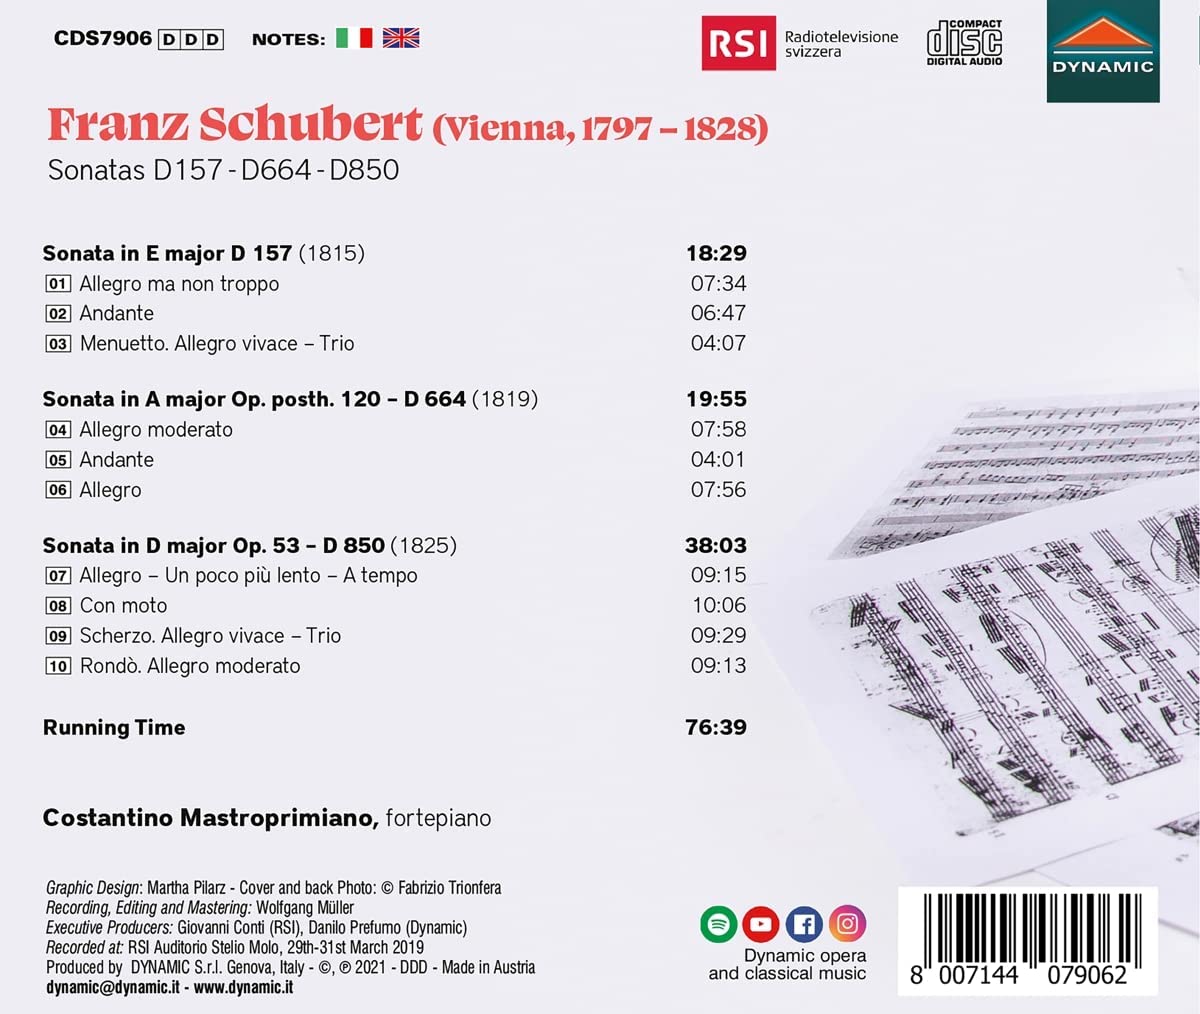 Costantino Mastroprimiano 슈베르트: 피아노 소나타 (Schubert: Piano Sonatas D157, D664, D850) 